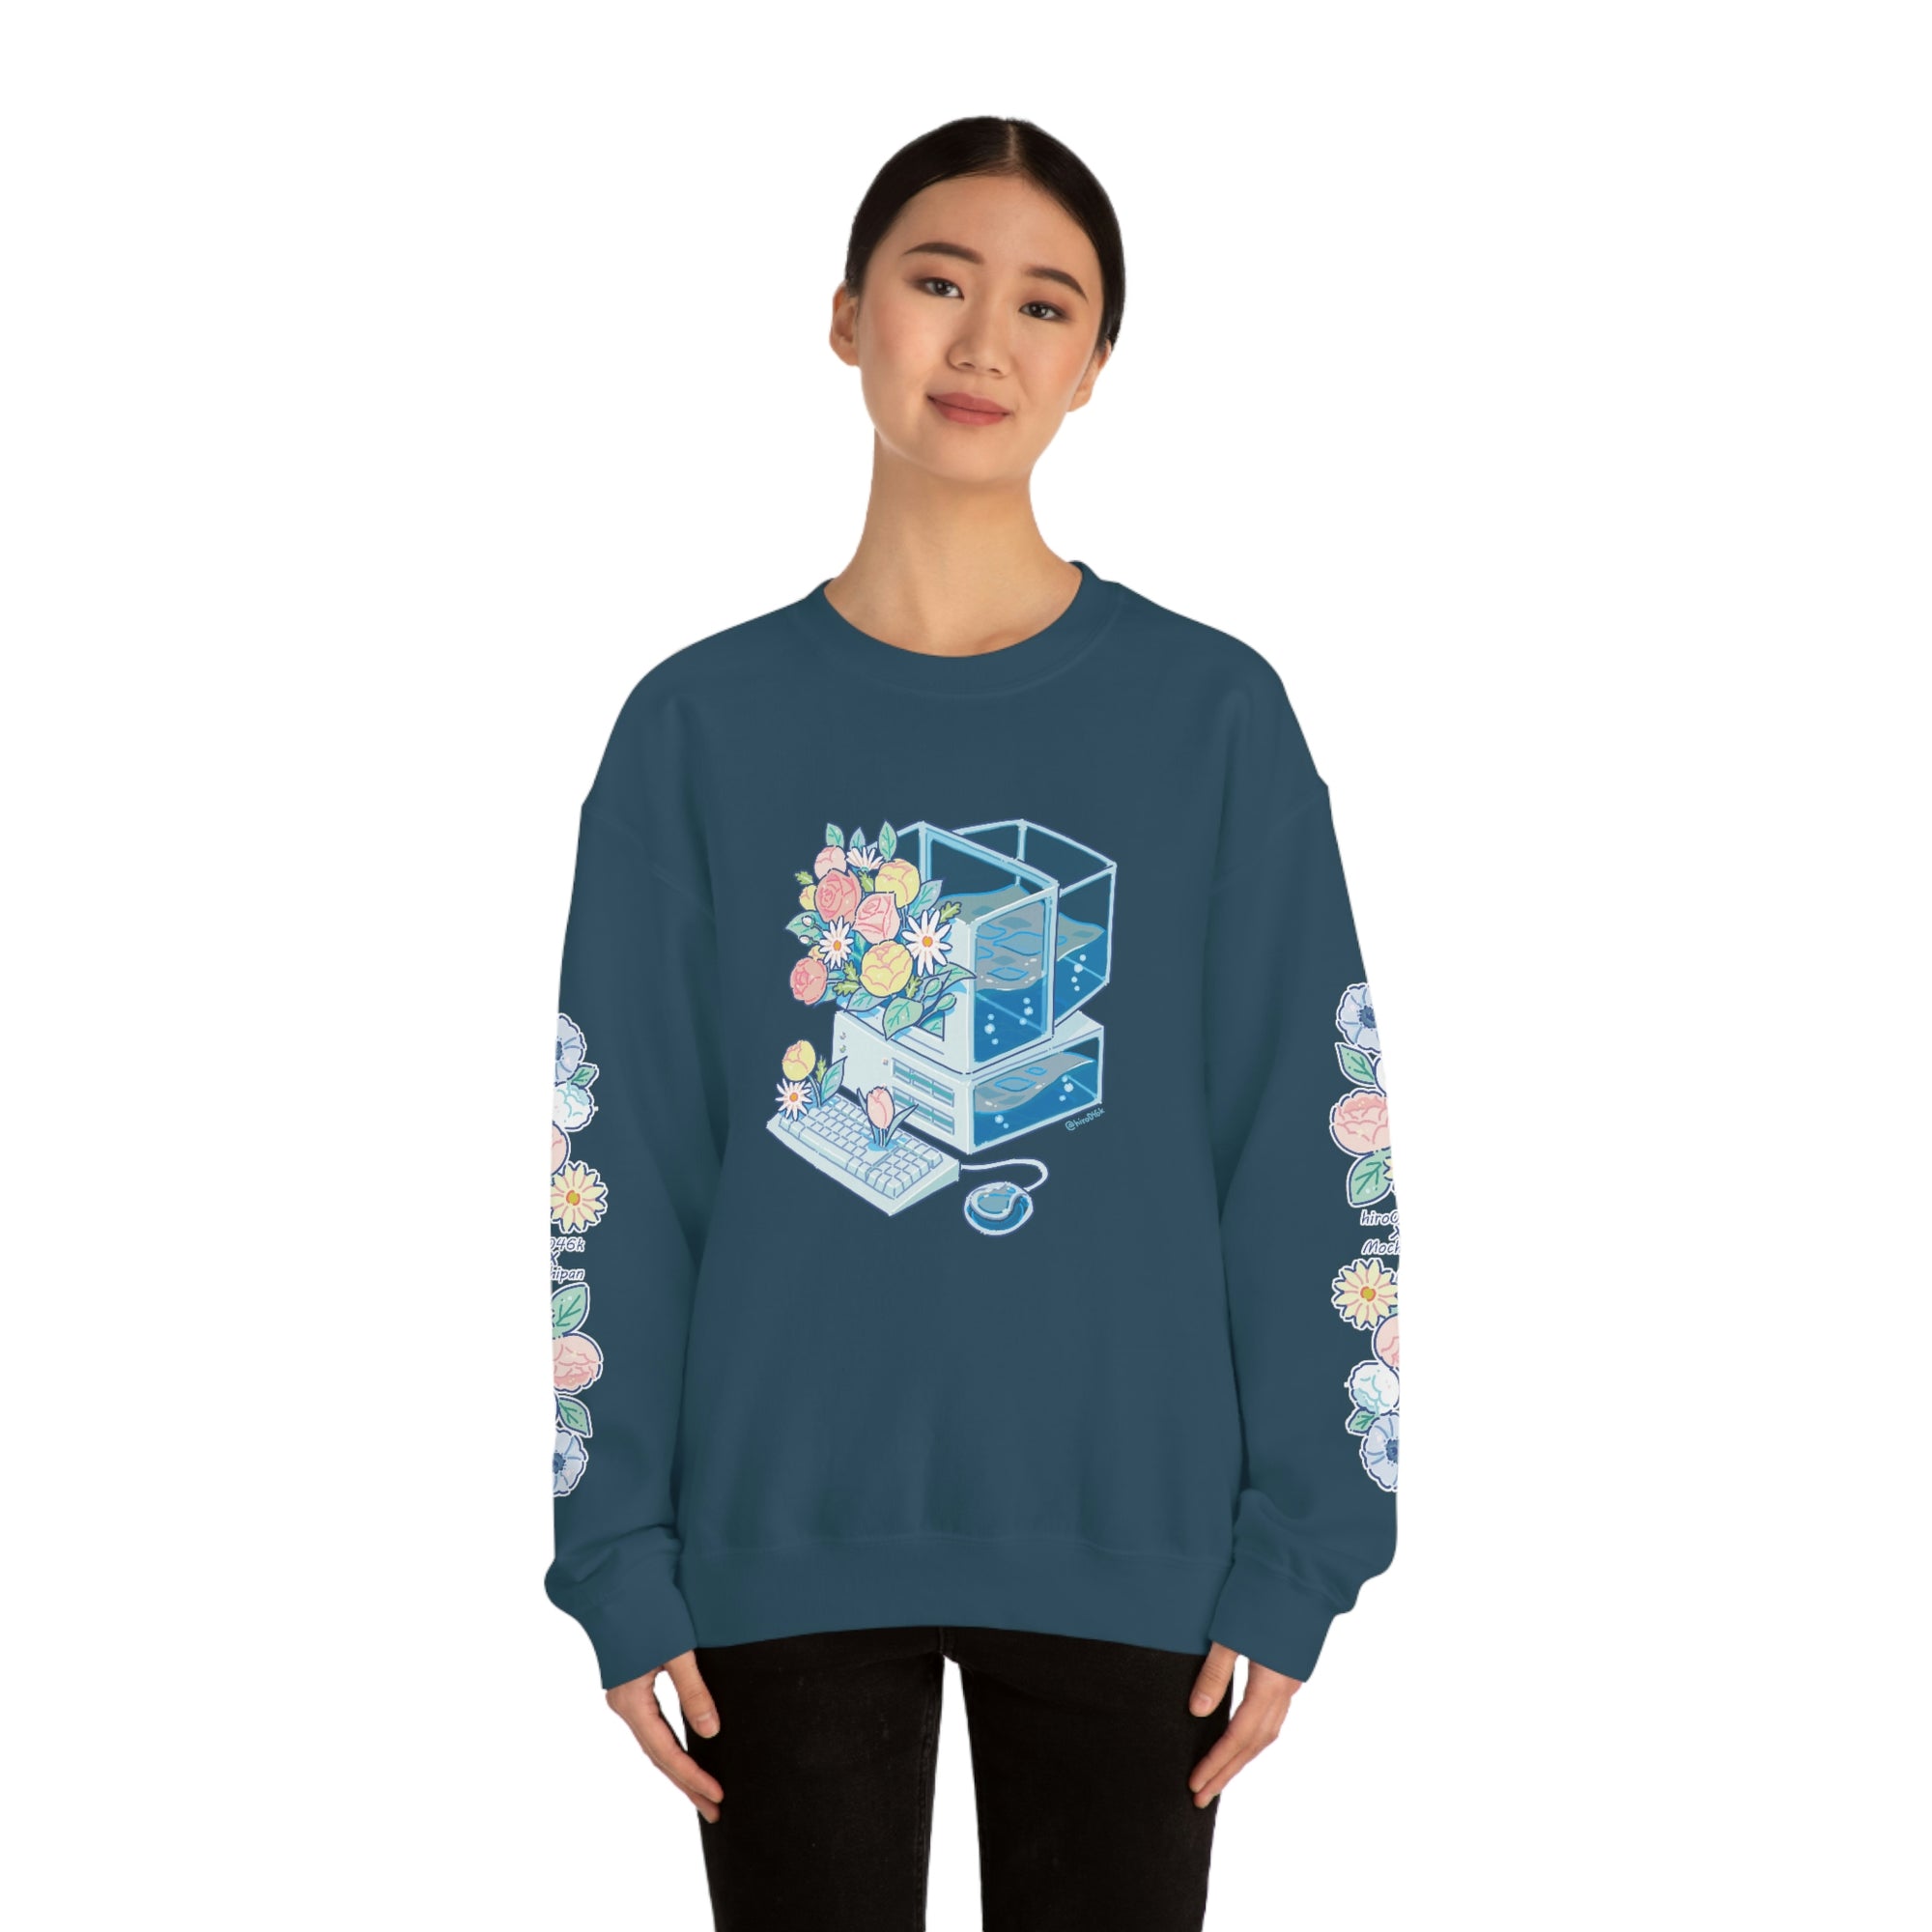 "Computer" Hiroko x Mochipan Exclusive Sweater